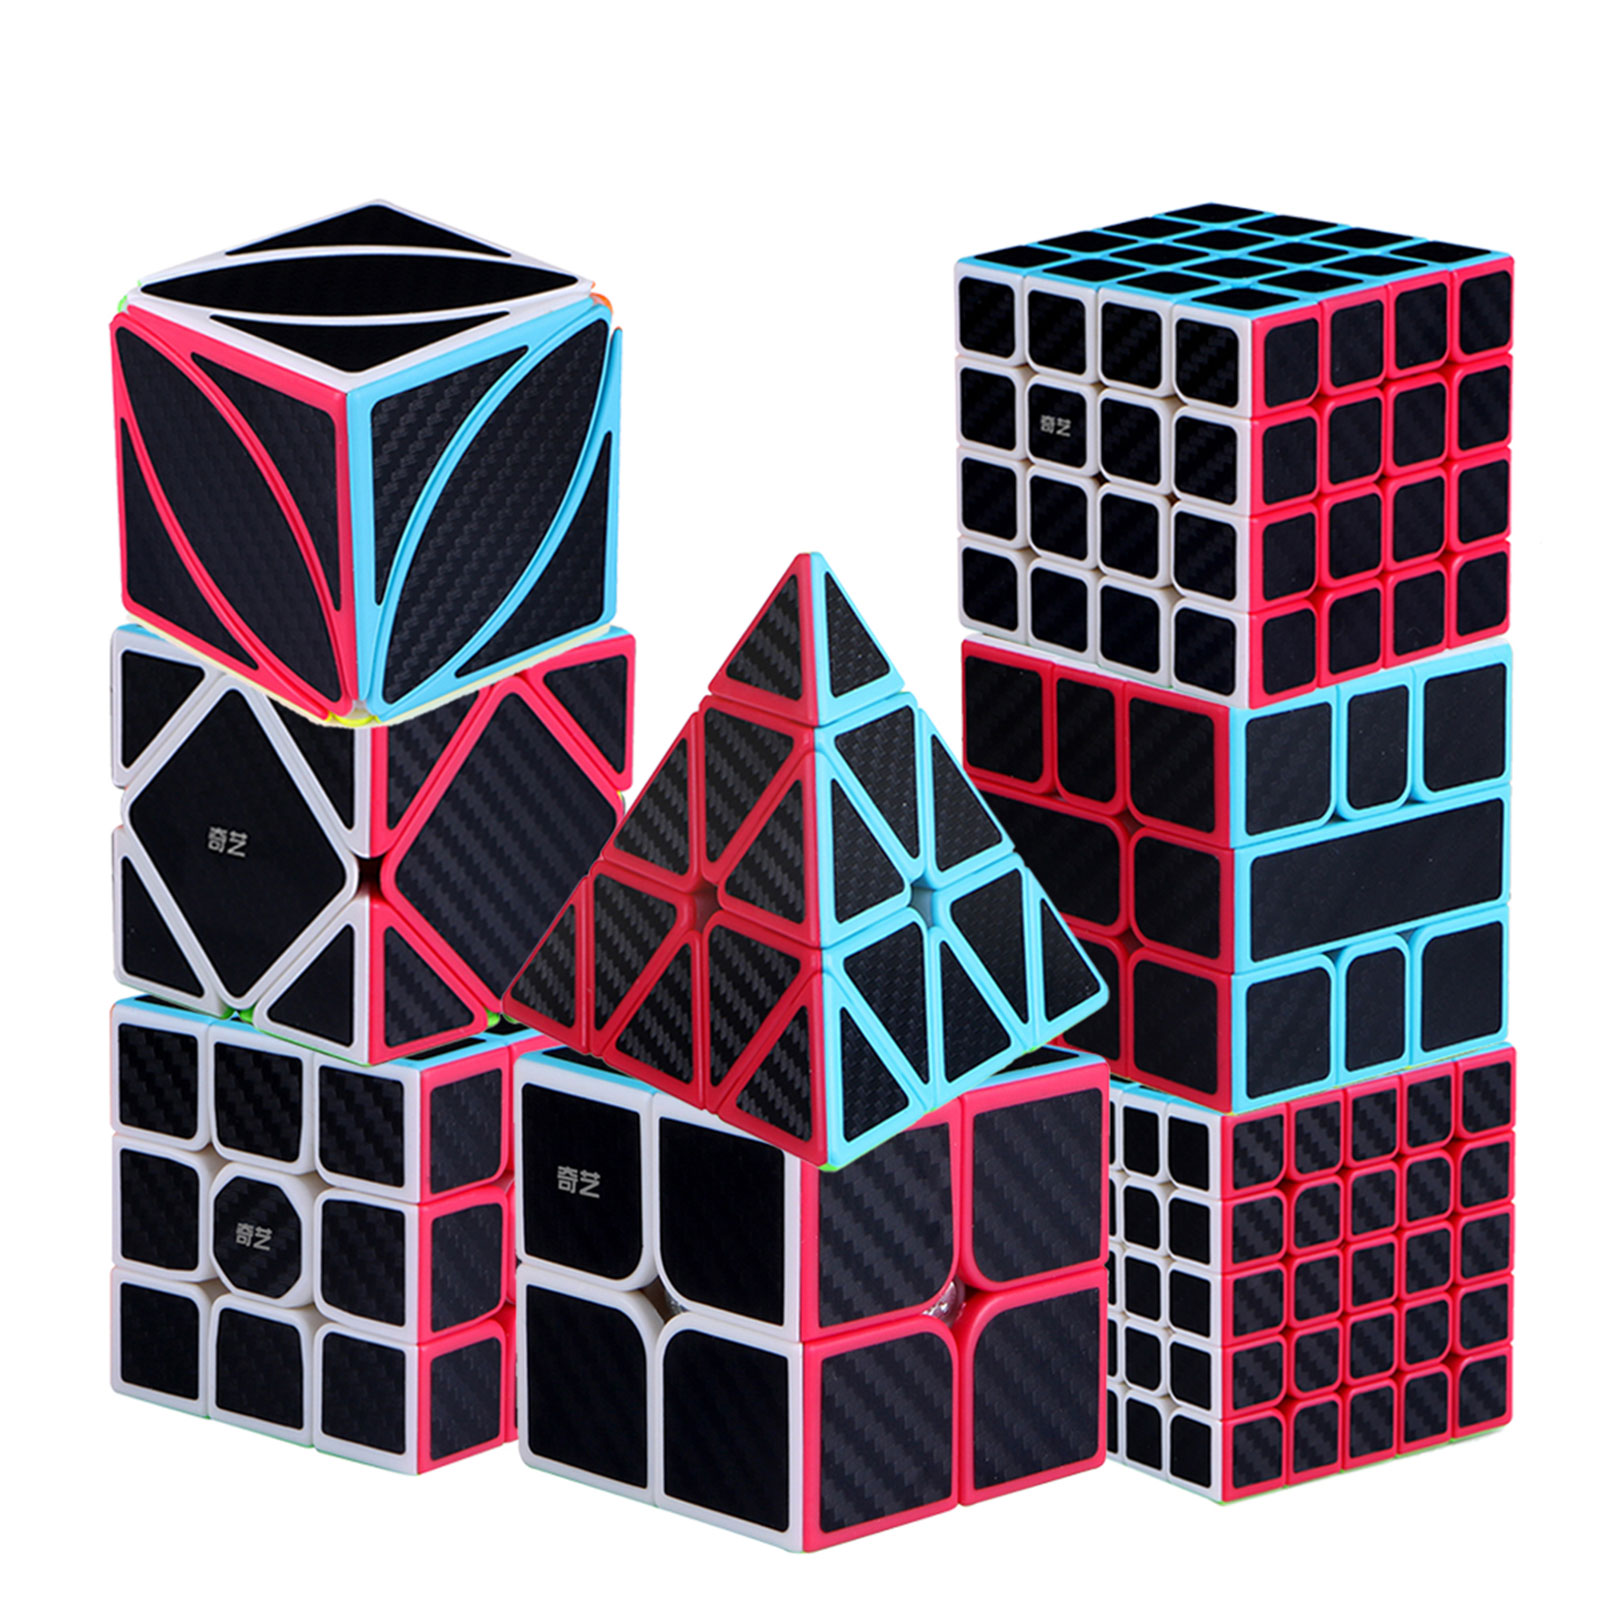 QiYi Carbon Fiber Speed Cube Set 2x2 3x3 4x4 5x5 Pyraminx Ivy Skewb Square-1 Cube Bundle (Black)